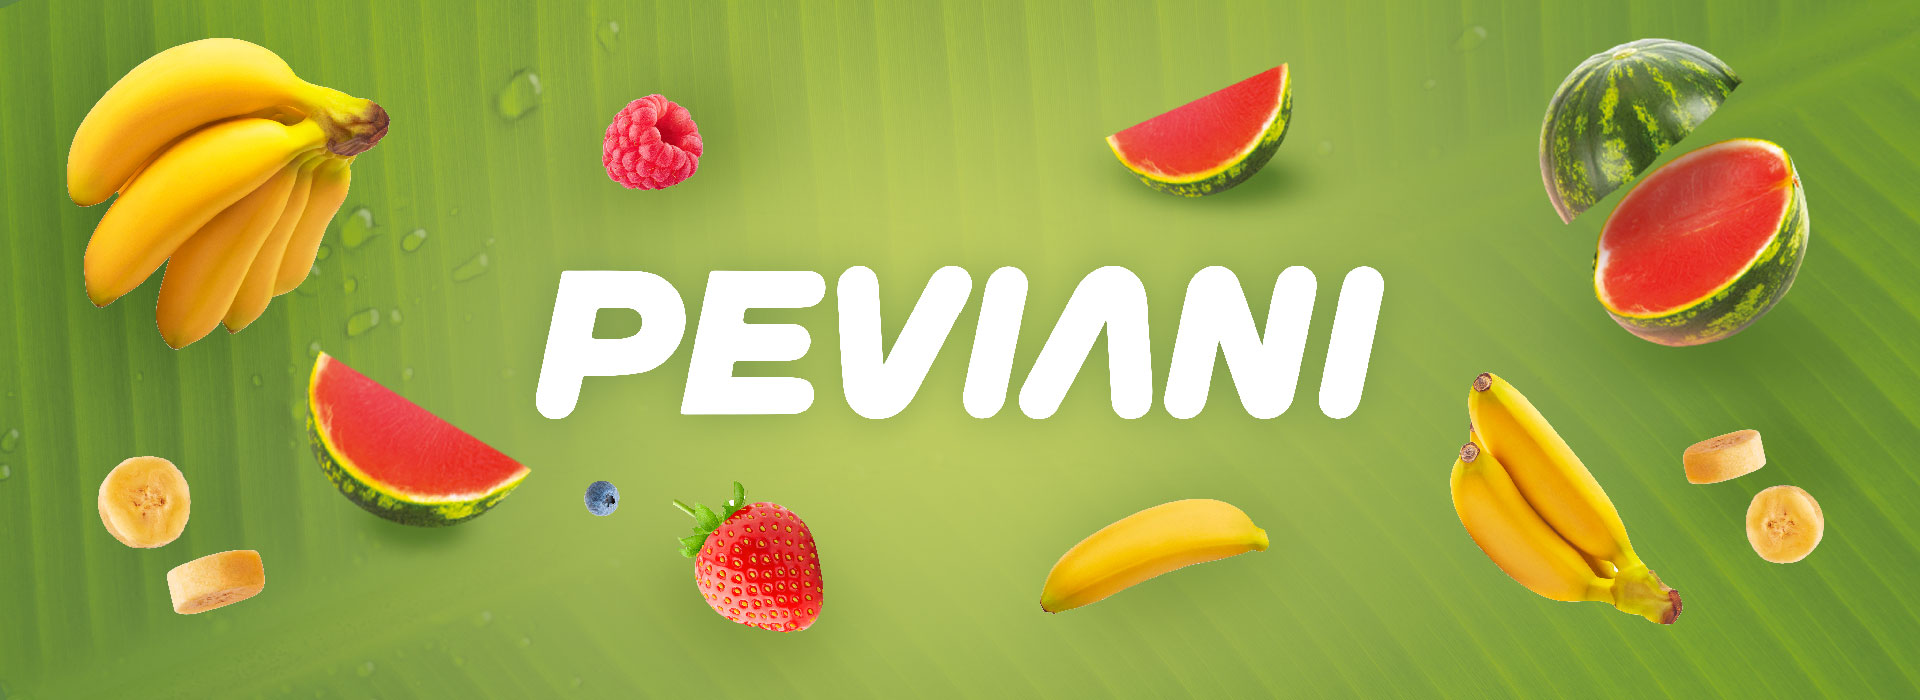 Peviani's fruit